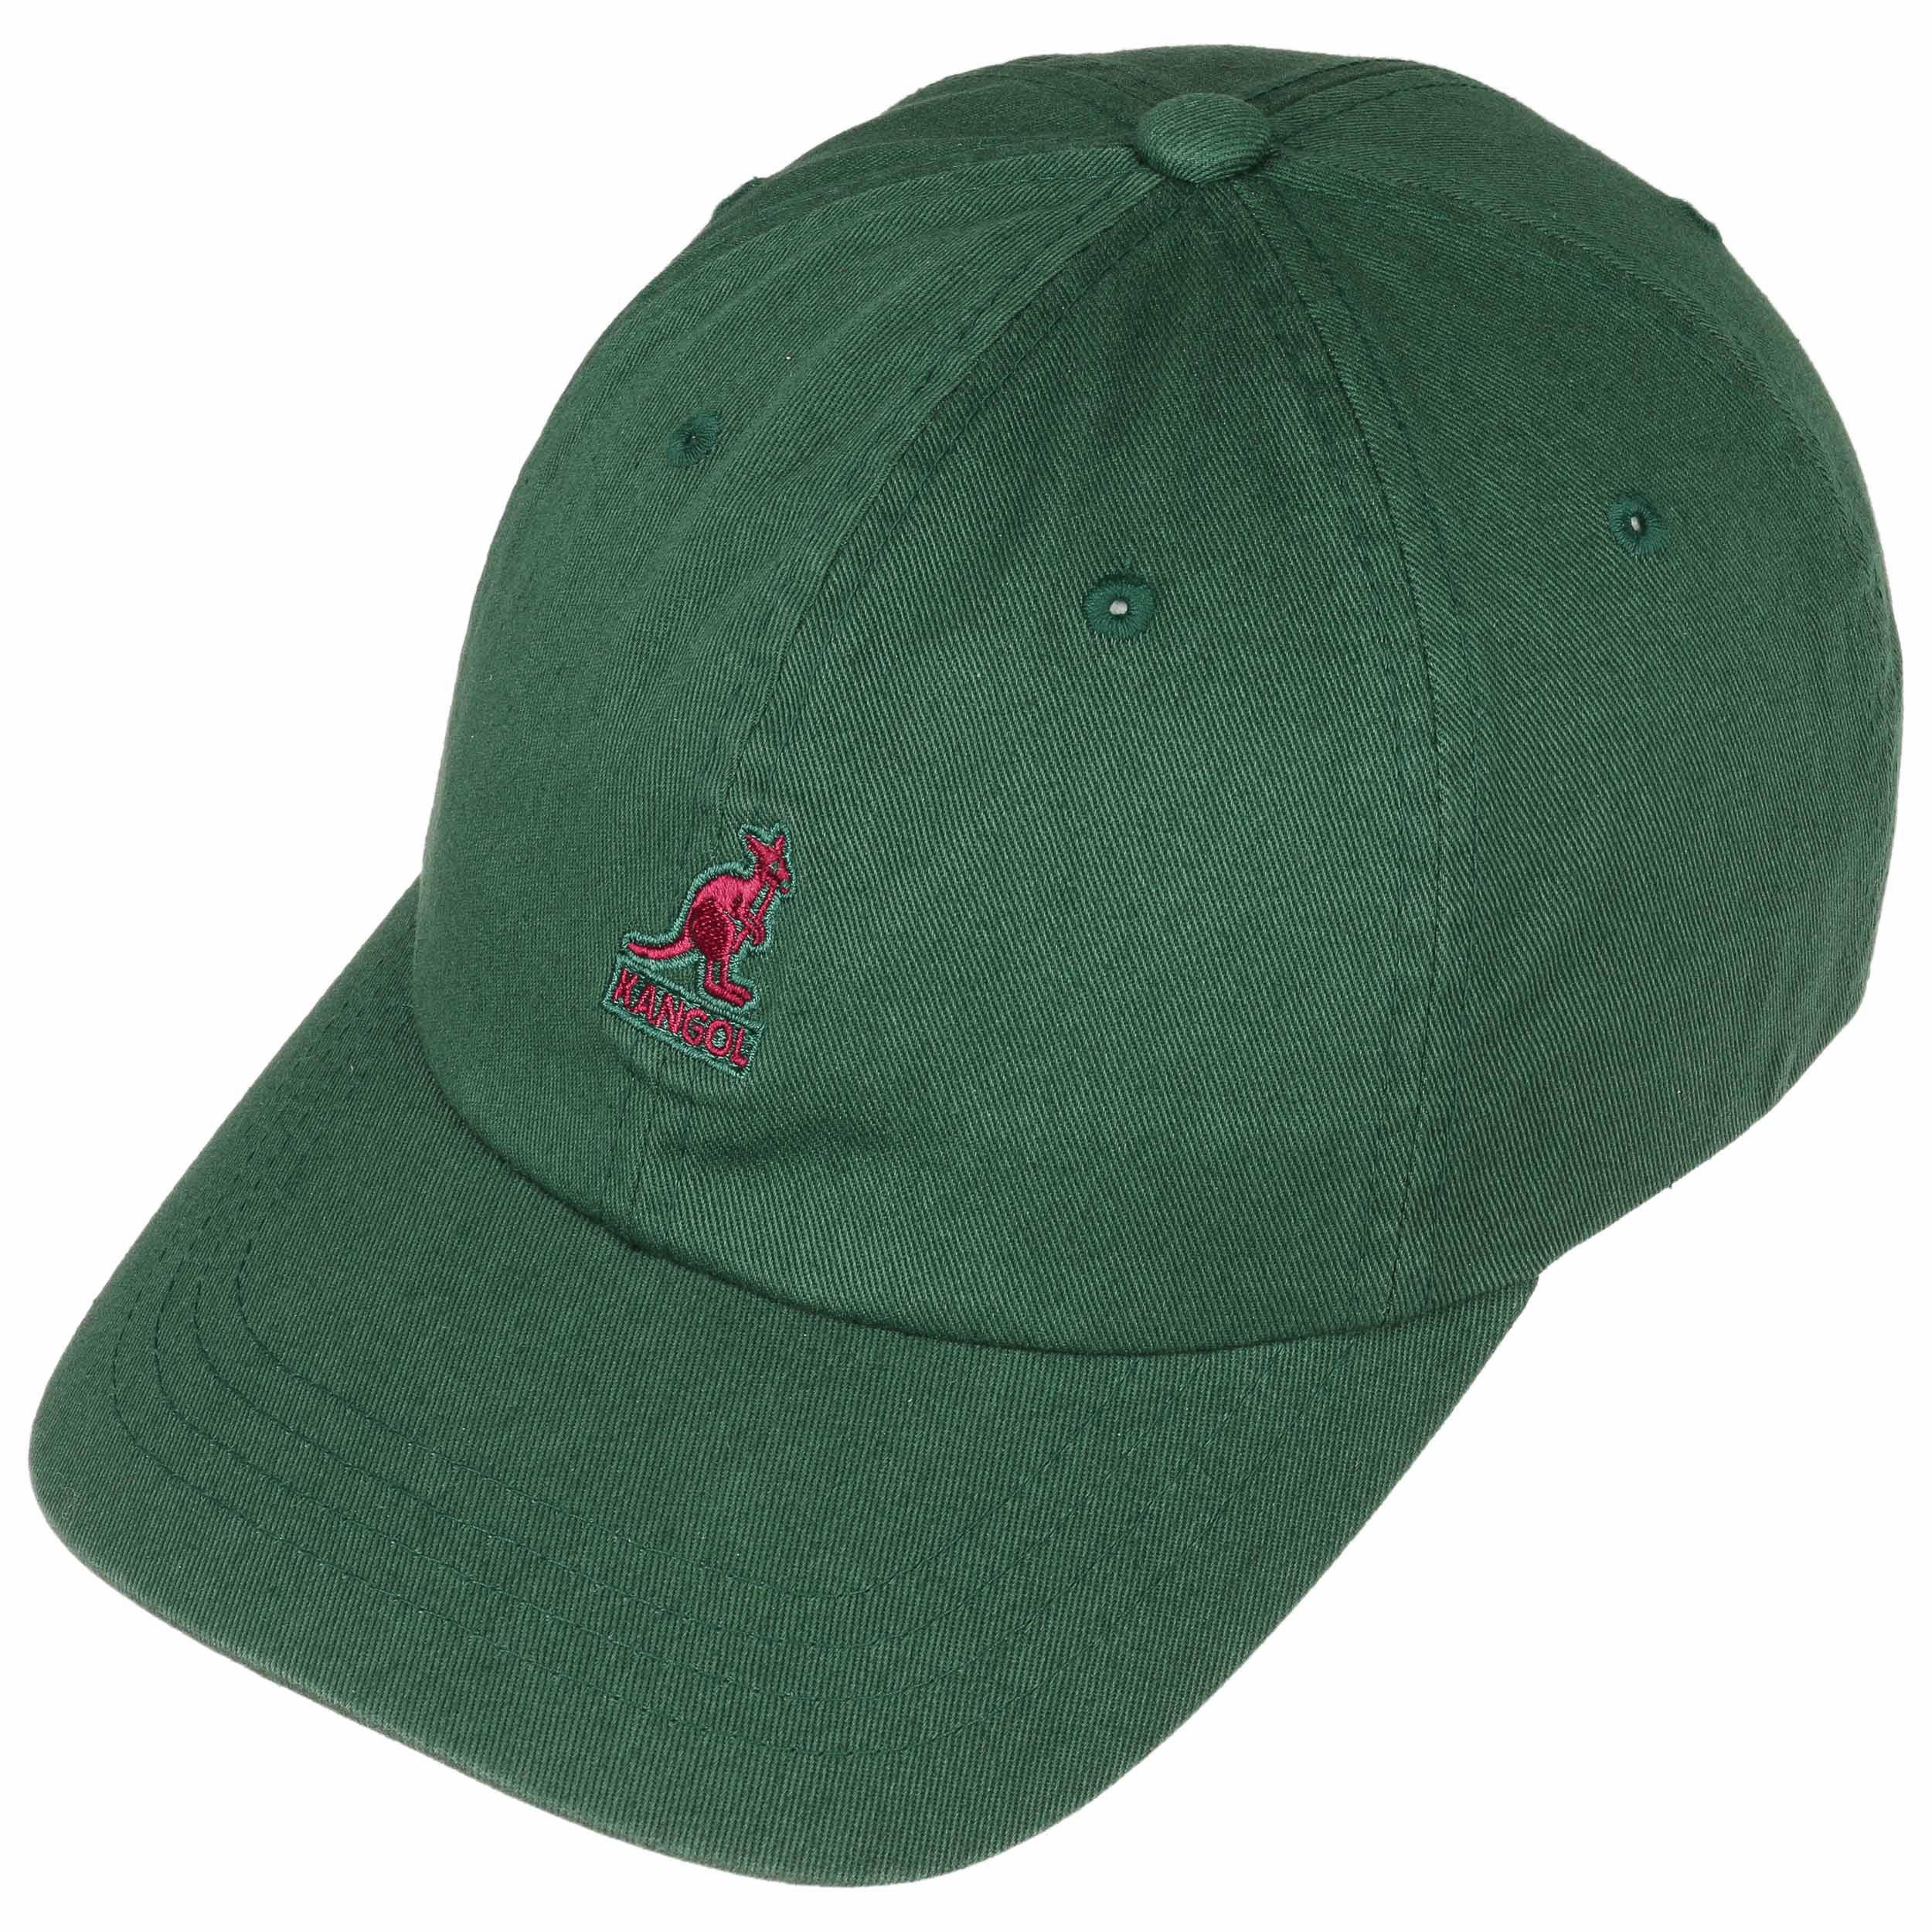 Kangol Hats Logo - Washed Dad Hat Baseball Cap by Kangol, EUR 39,95 --> Hats, caps ...